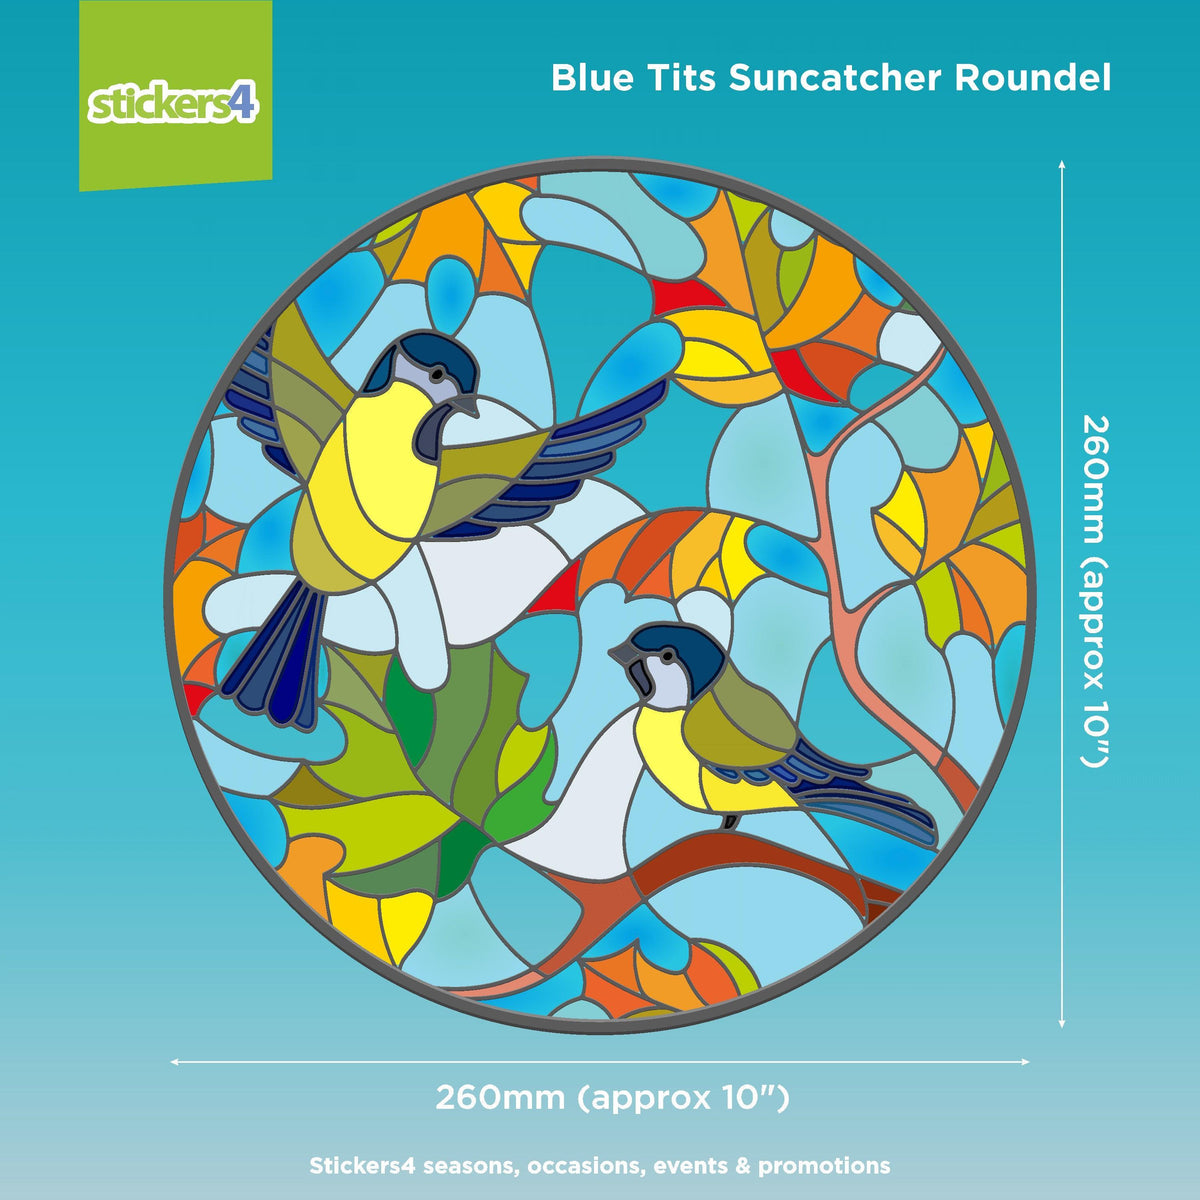 Blue Tits Suncatcher Roundel Window Cling Decorative Bird Strike Prevention